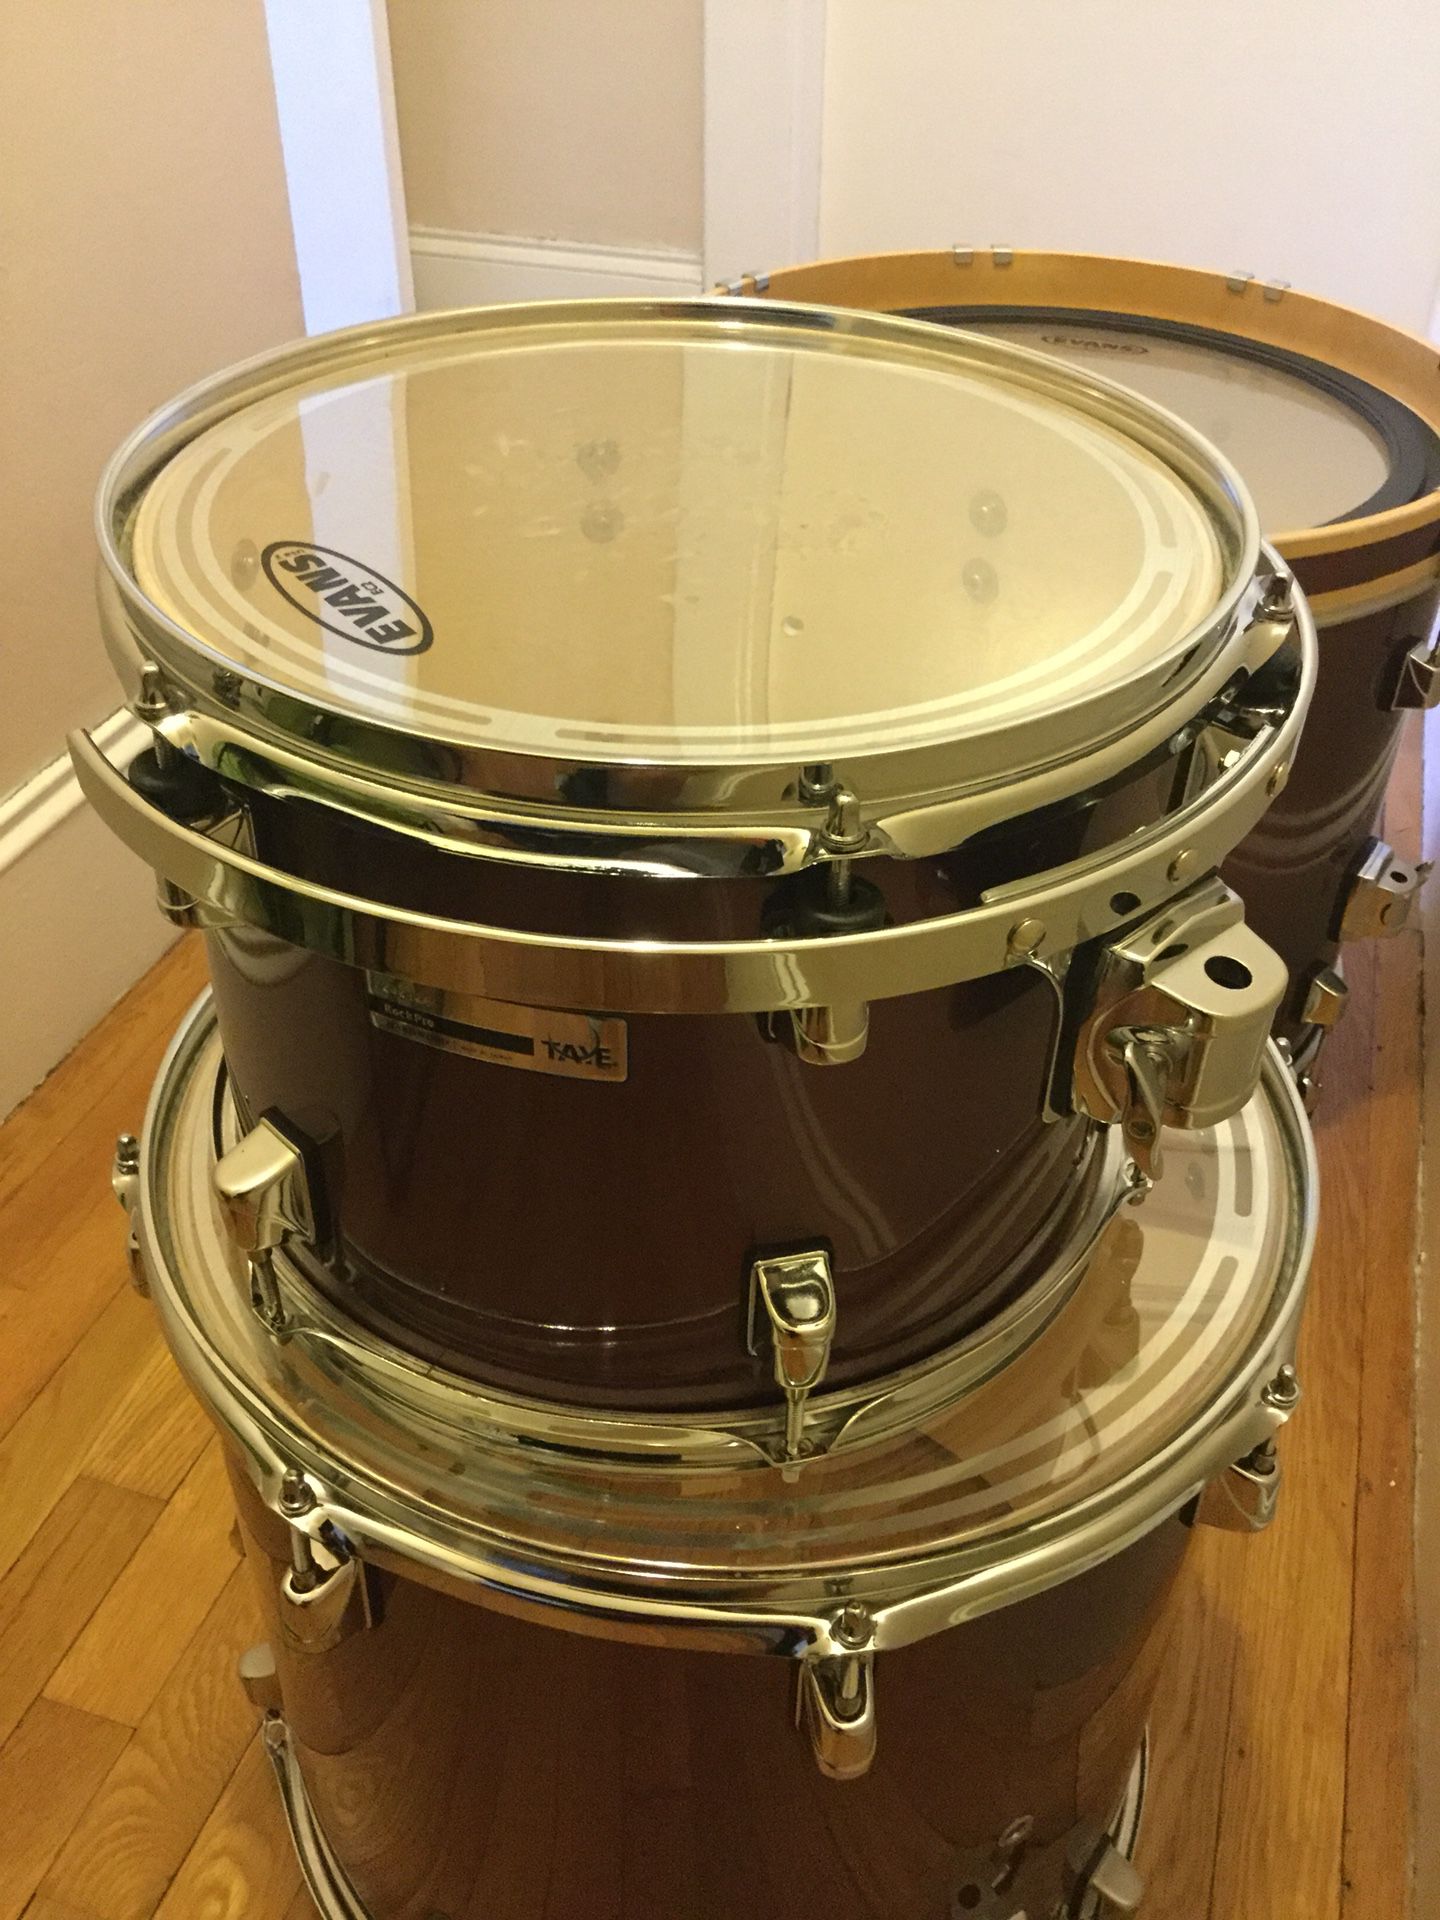 Taye RockPro 4-piece shell kit drum set